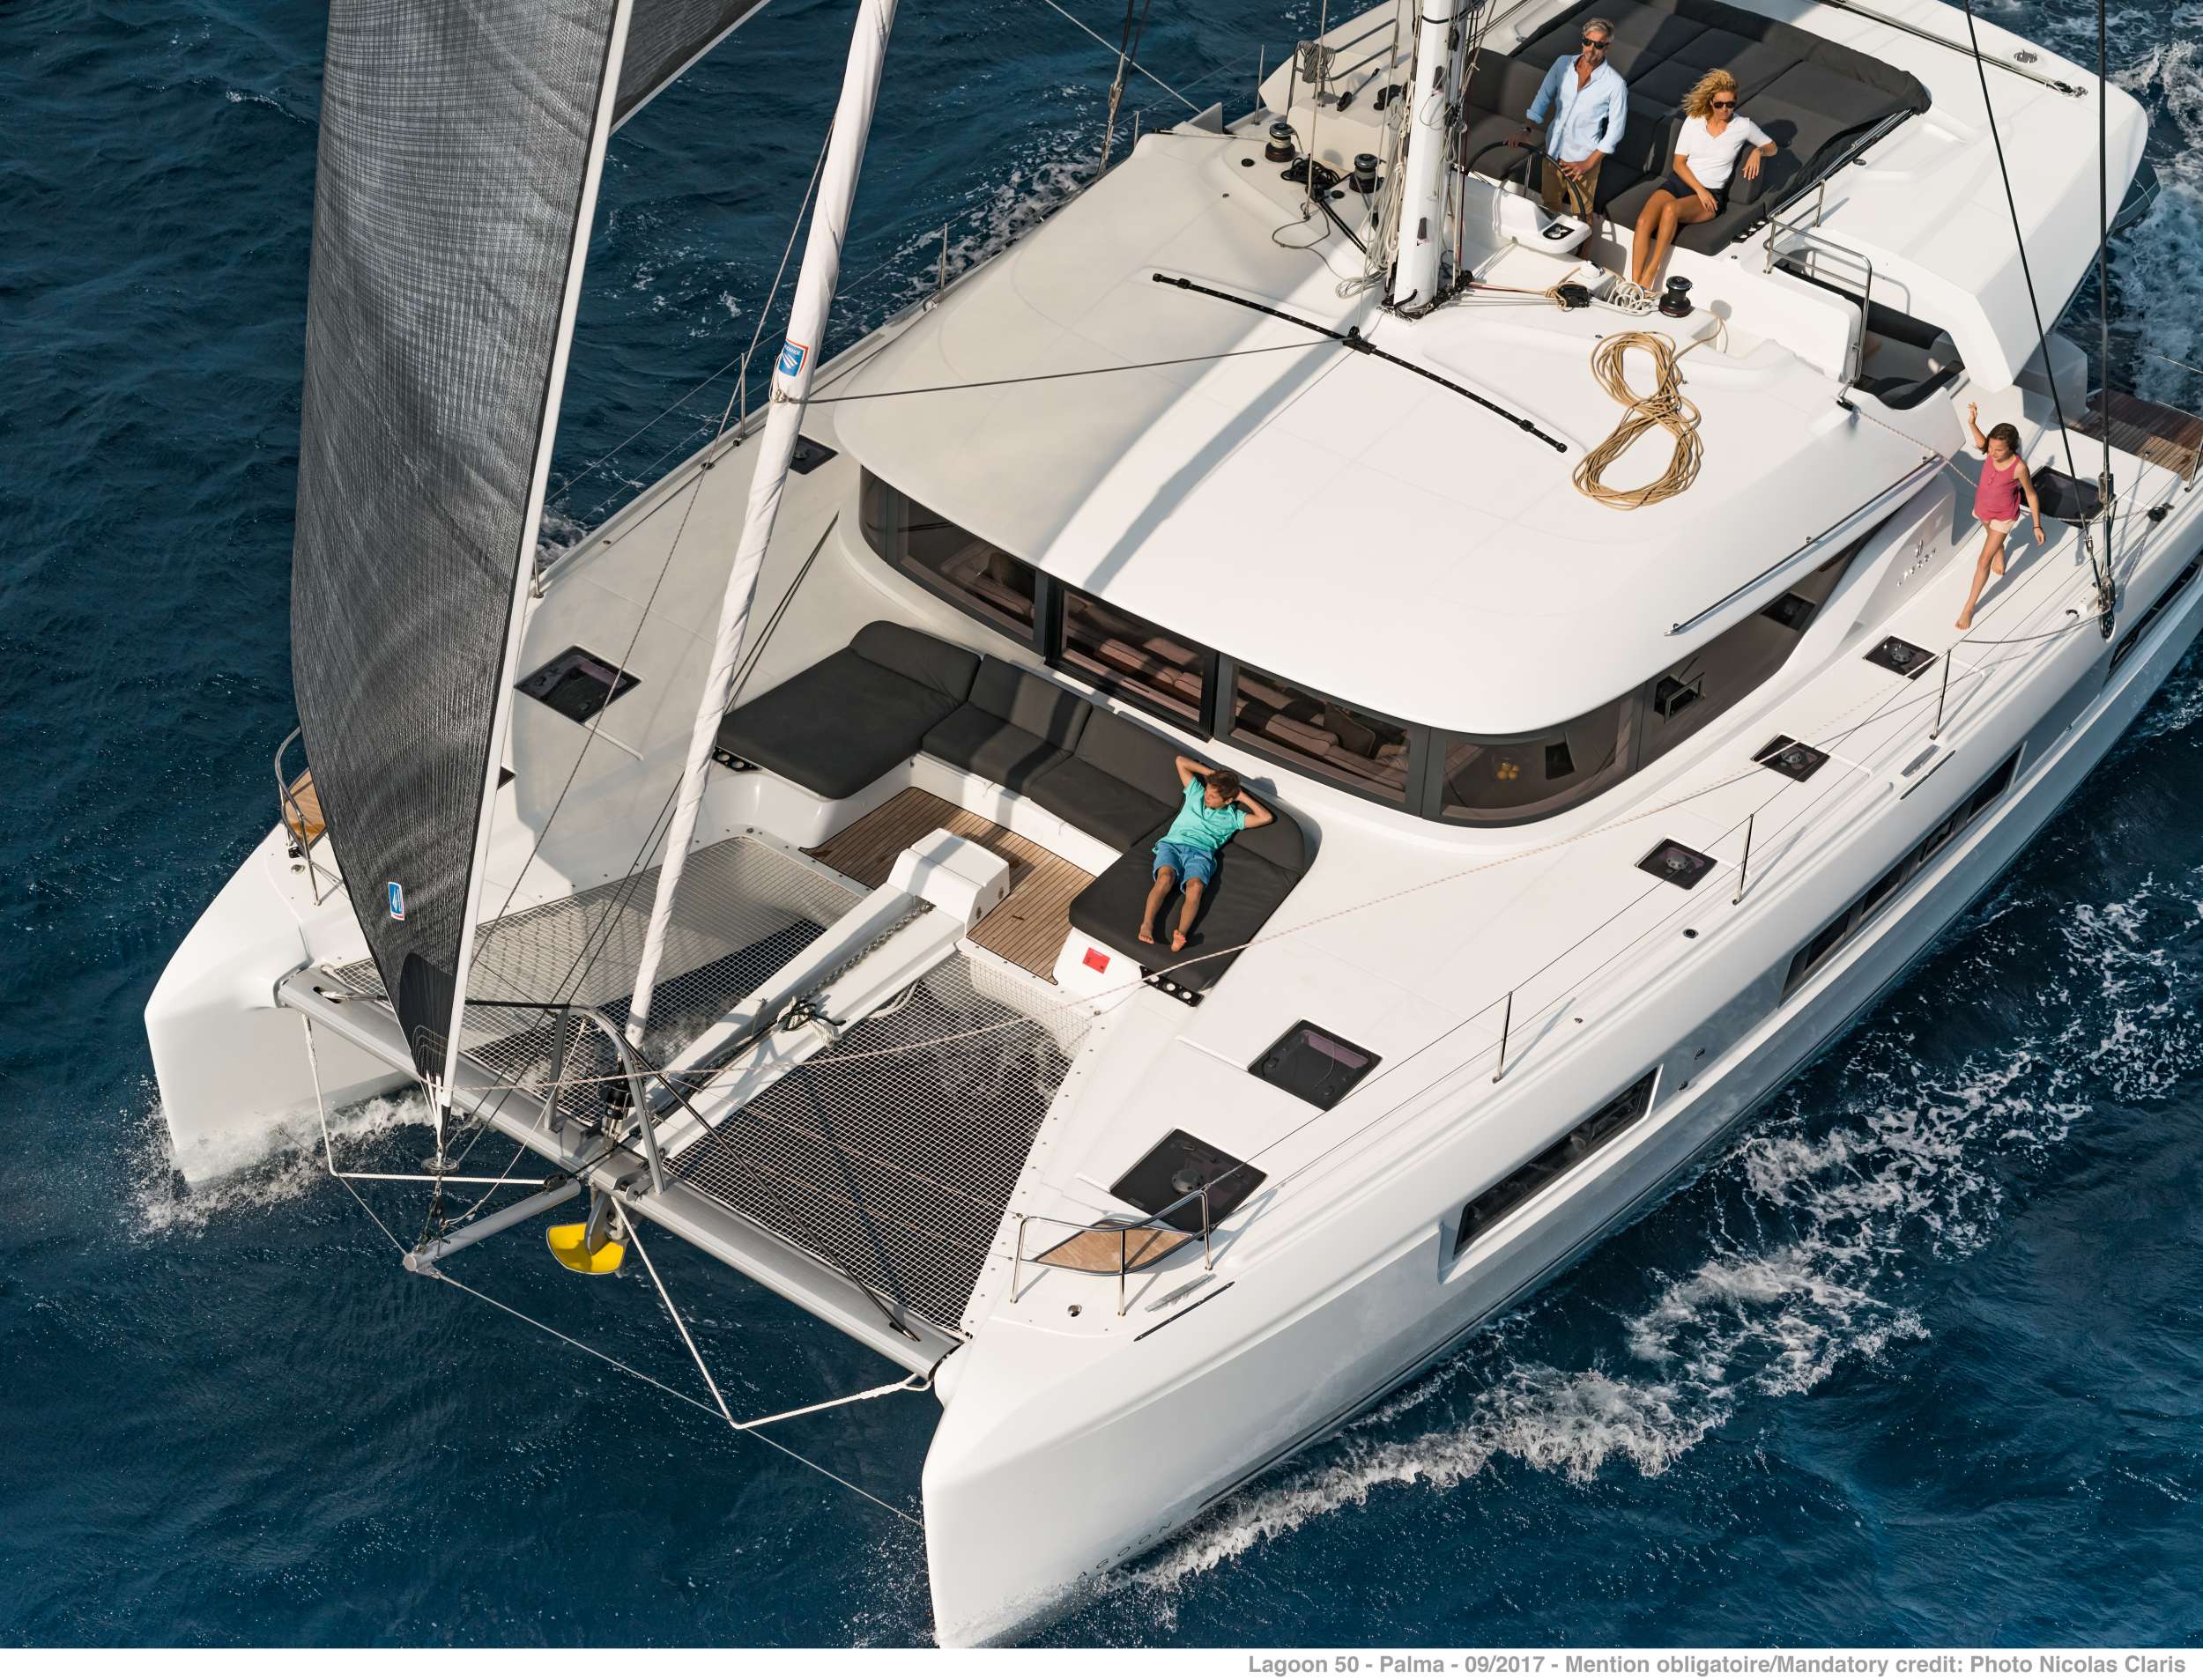 ONEIDA 2 - Yacht Charter Neos Marmaras & Boat hire in Greece 6